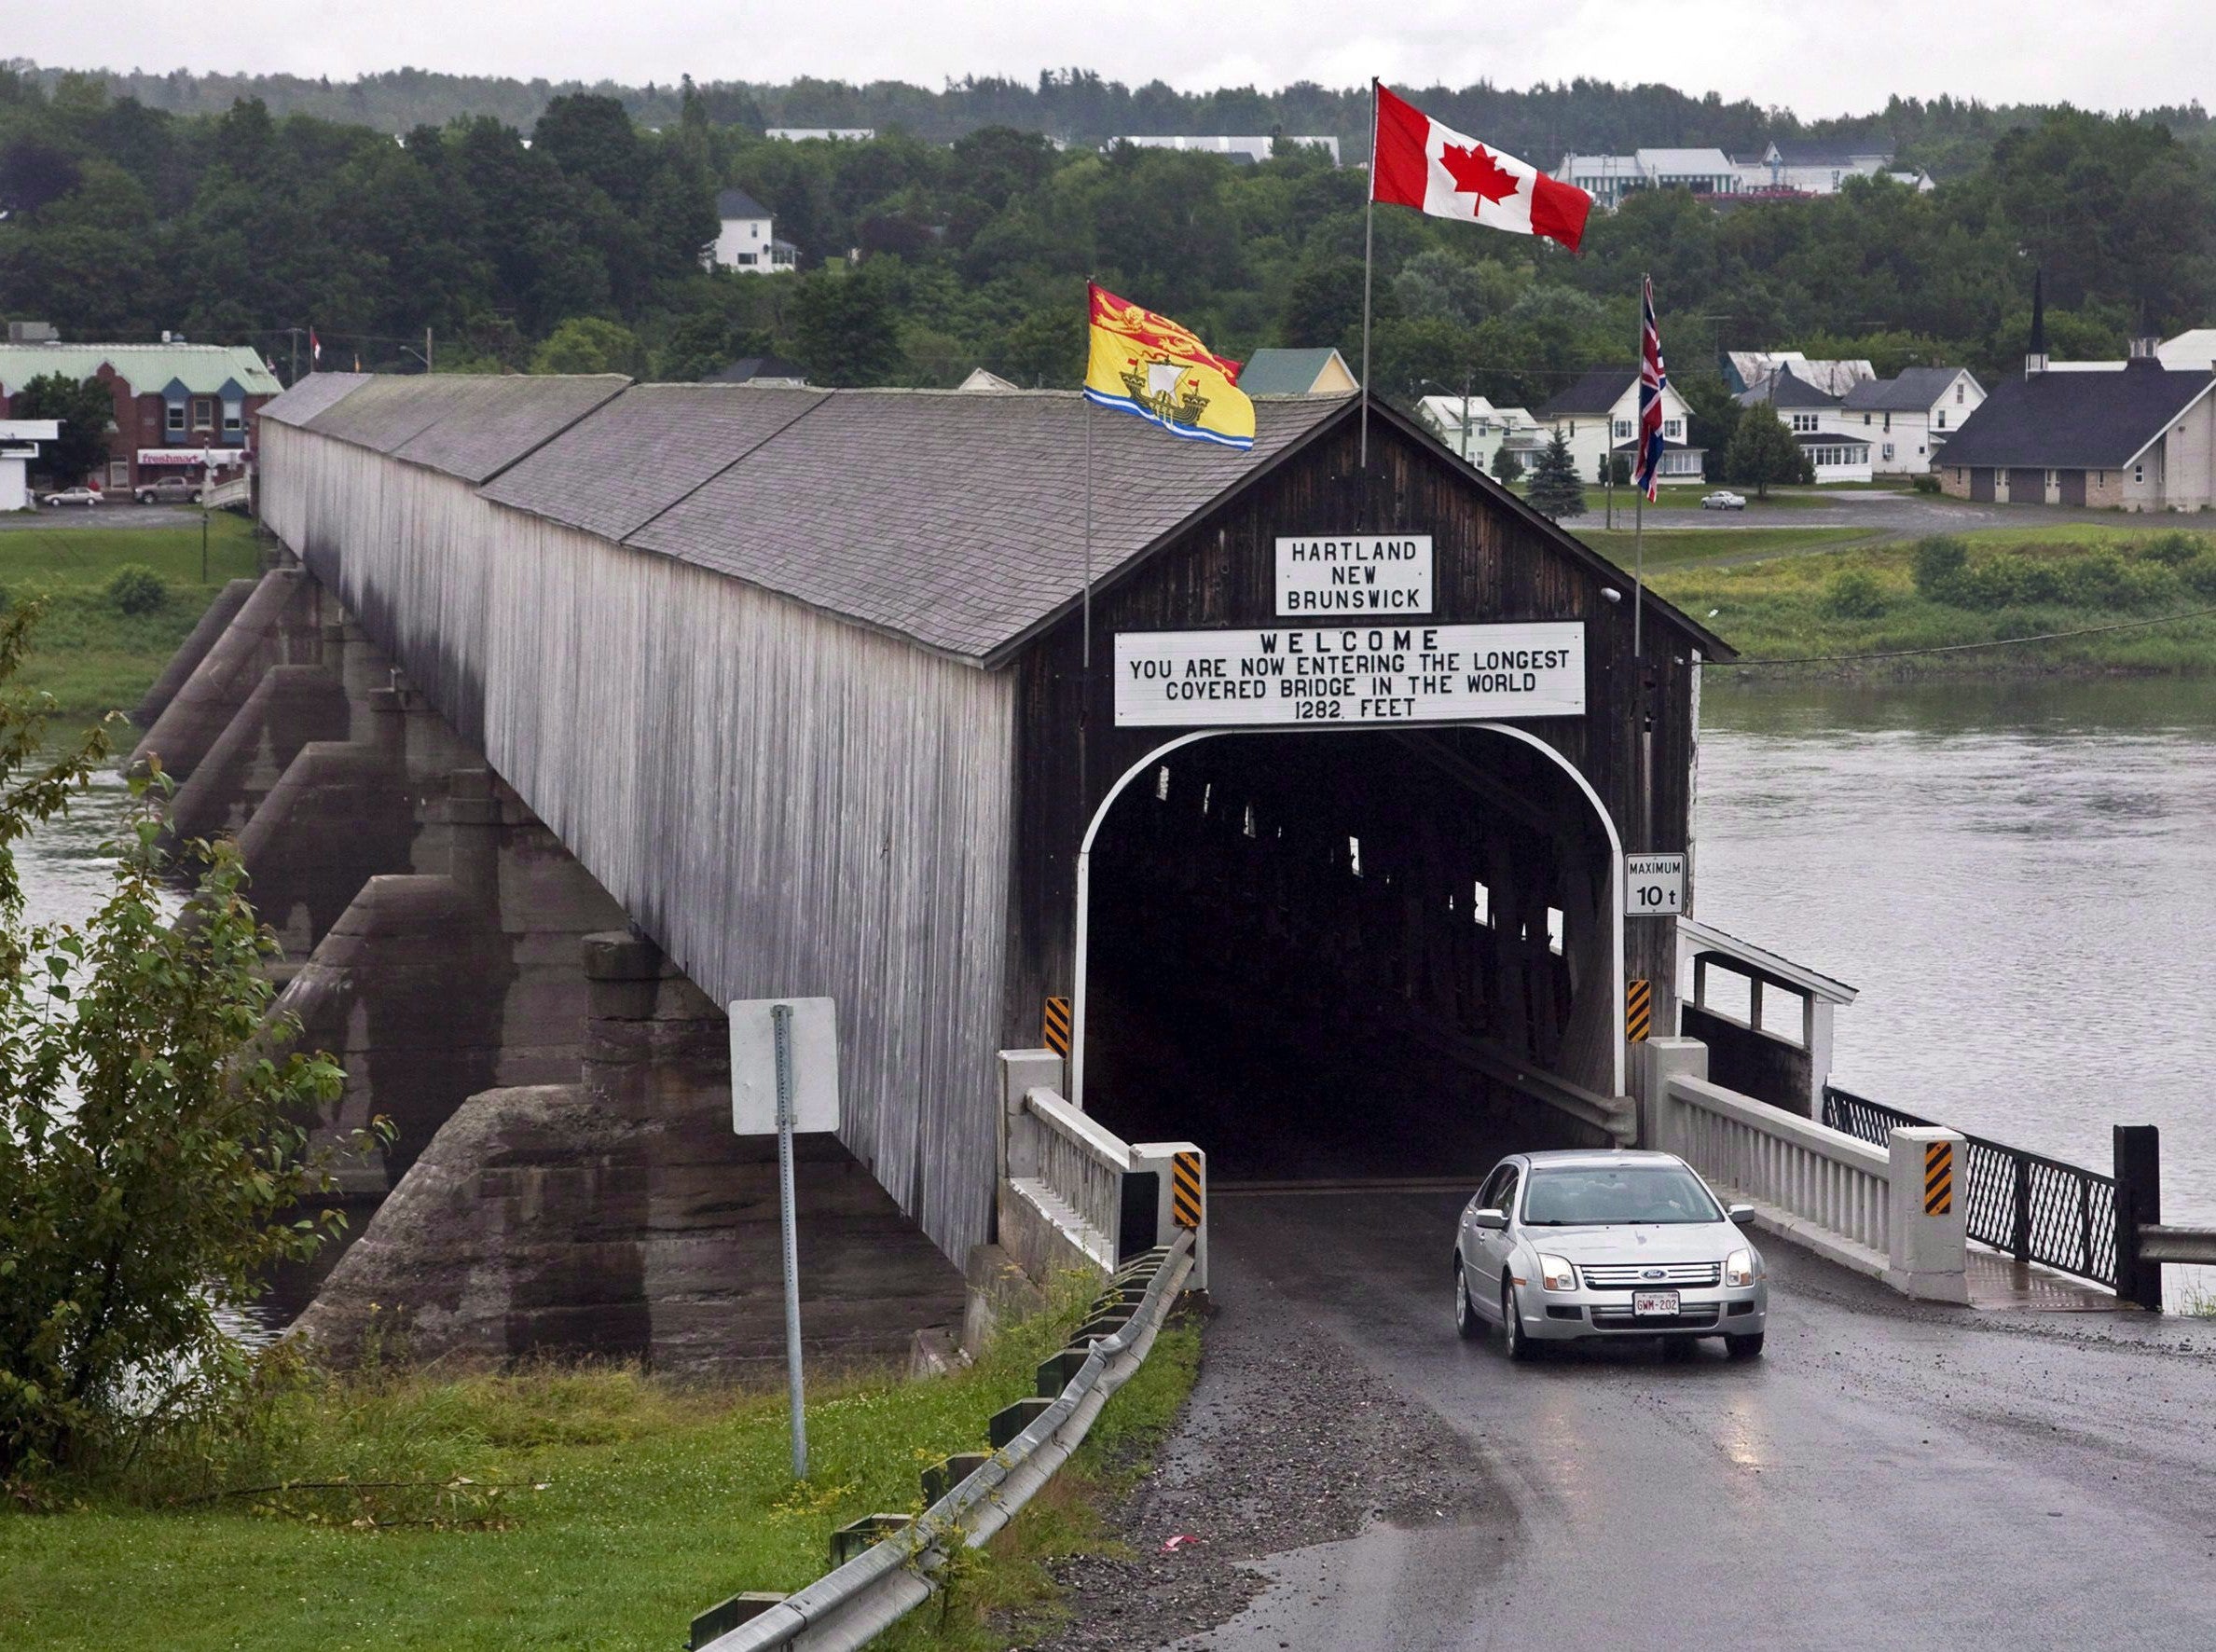 New Brunswick Bridge is the longest covered bridge in the world